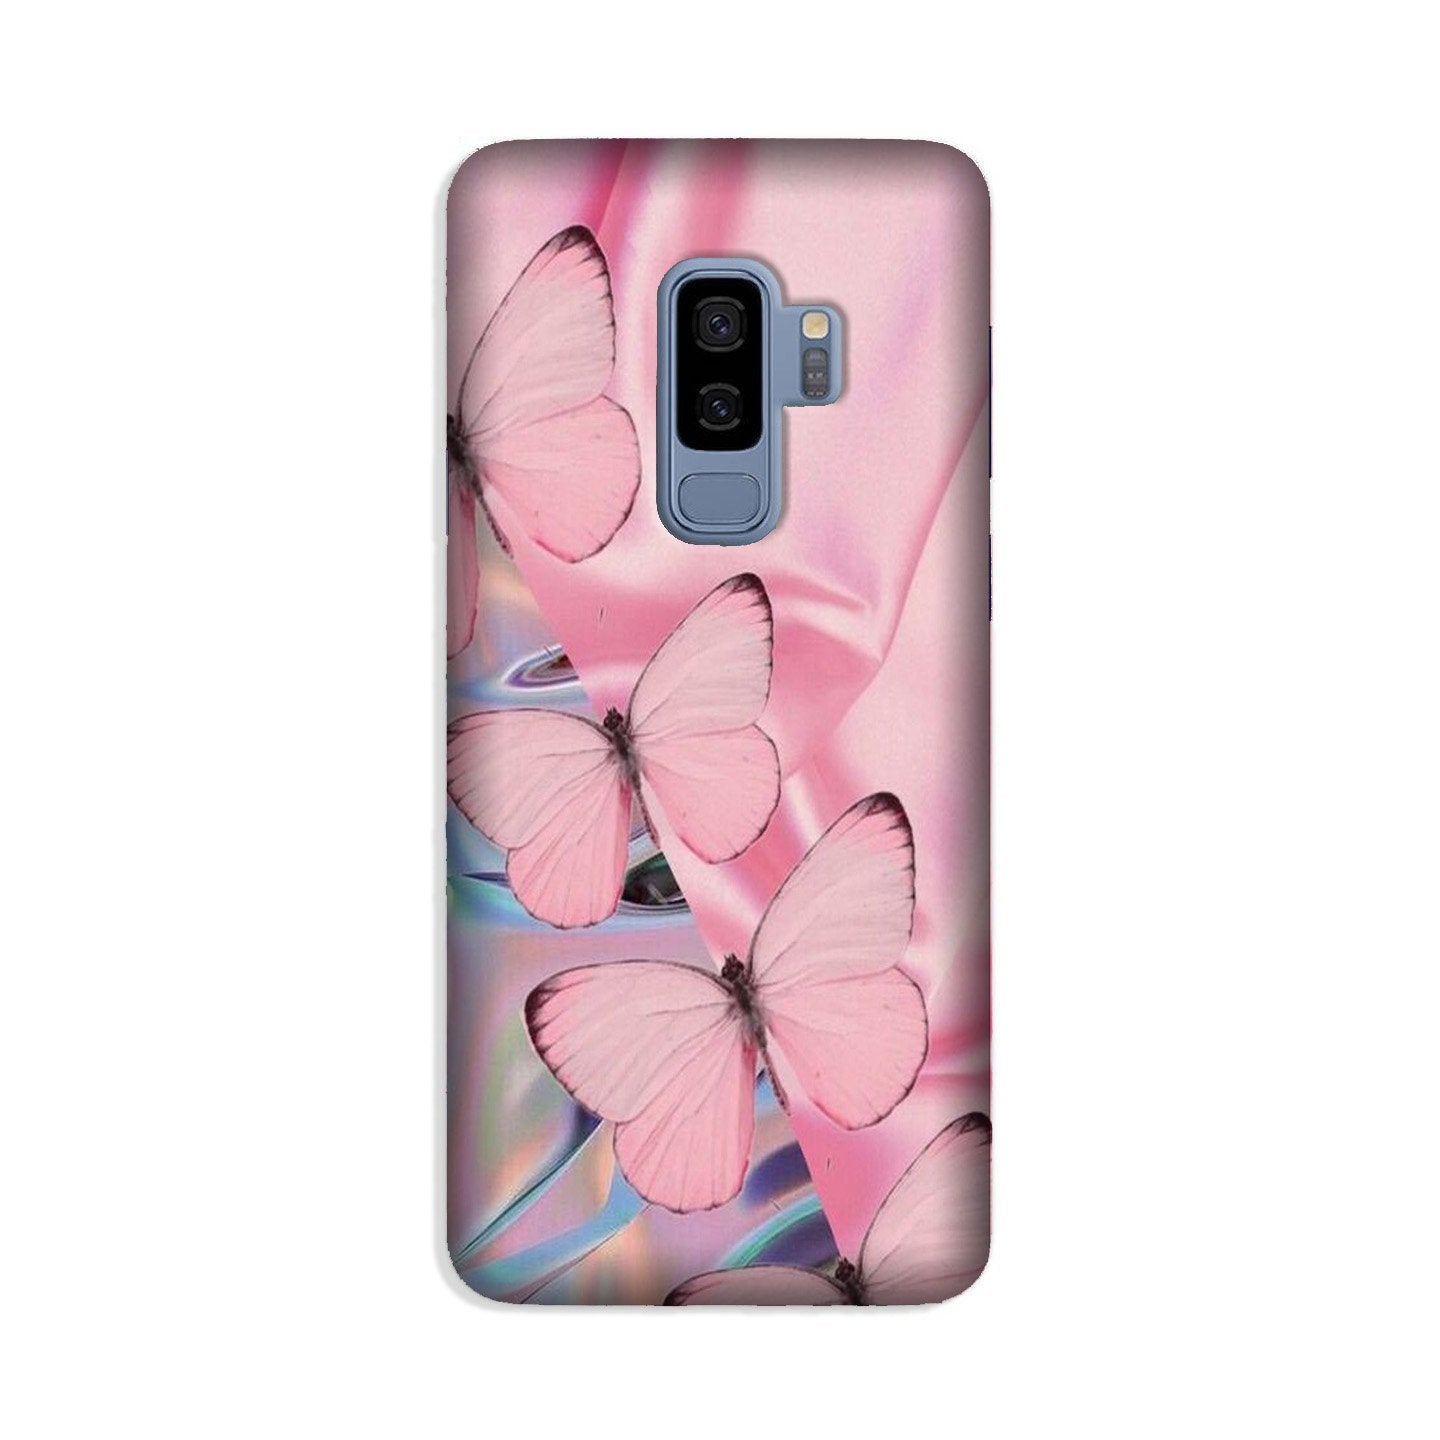 Butterflies Case for Galaxy S9 Plus